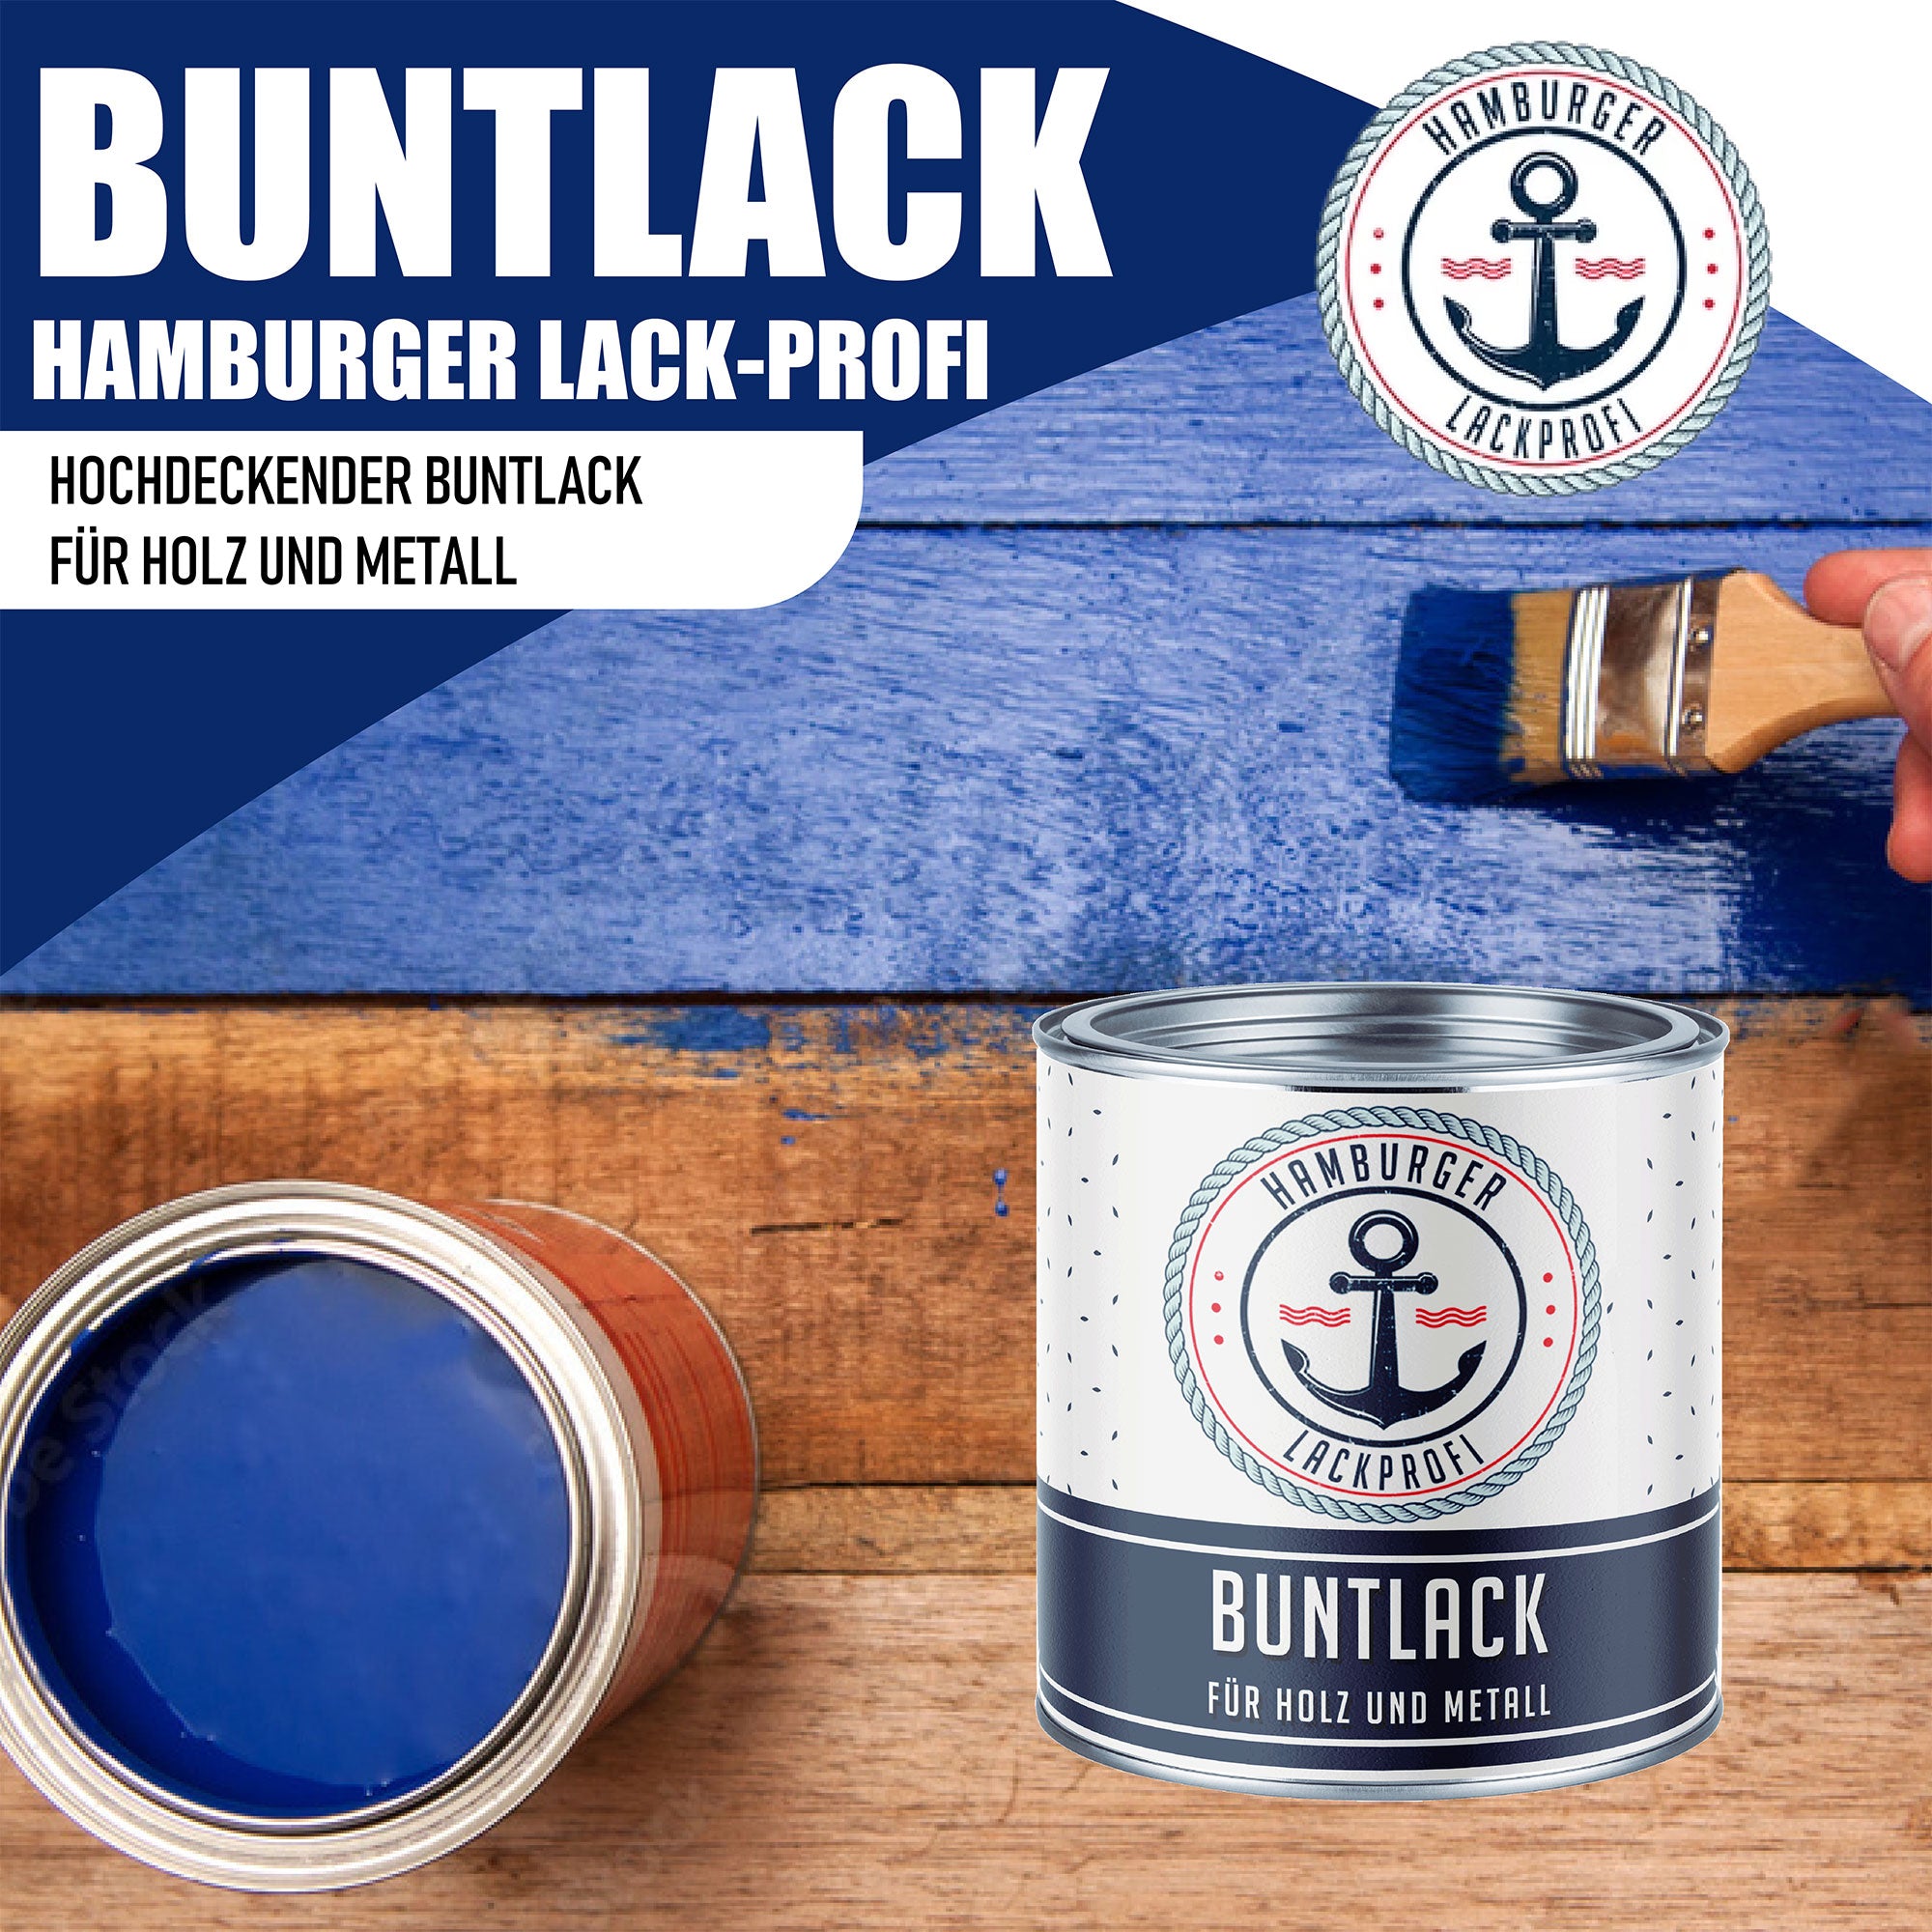 Hamburger Lack-Profi Buntlack - Robuster Kunstharzlack - Hamburger Lack-Profi